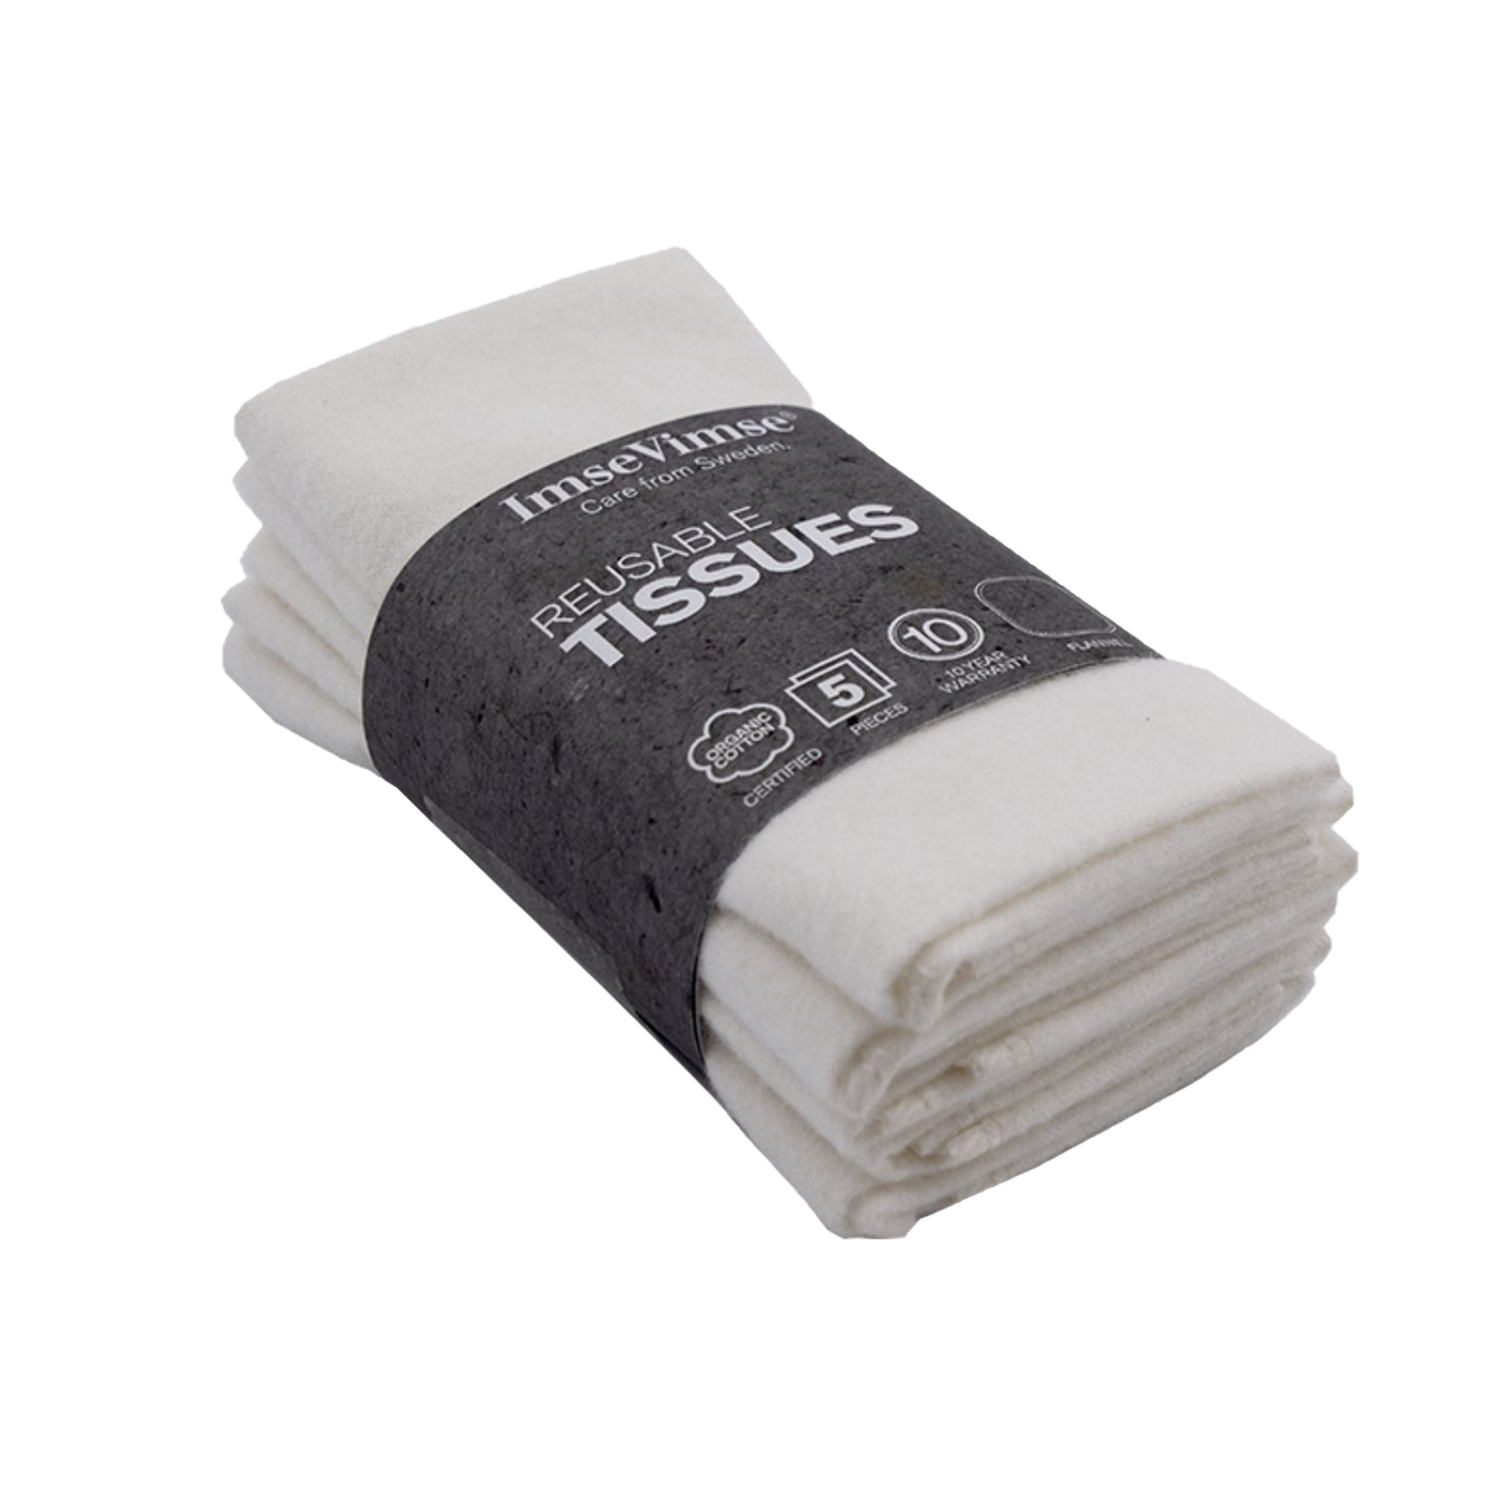 ImseVimse reusable Tissues 5 pack (print: nature)